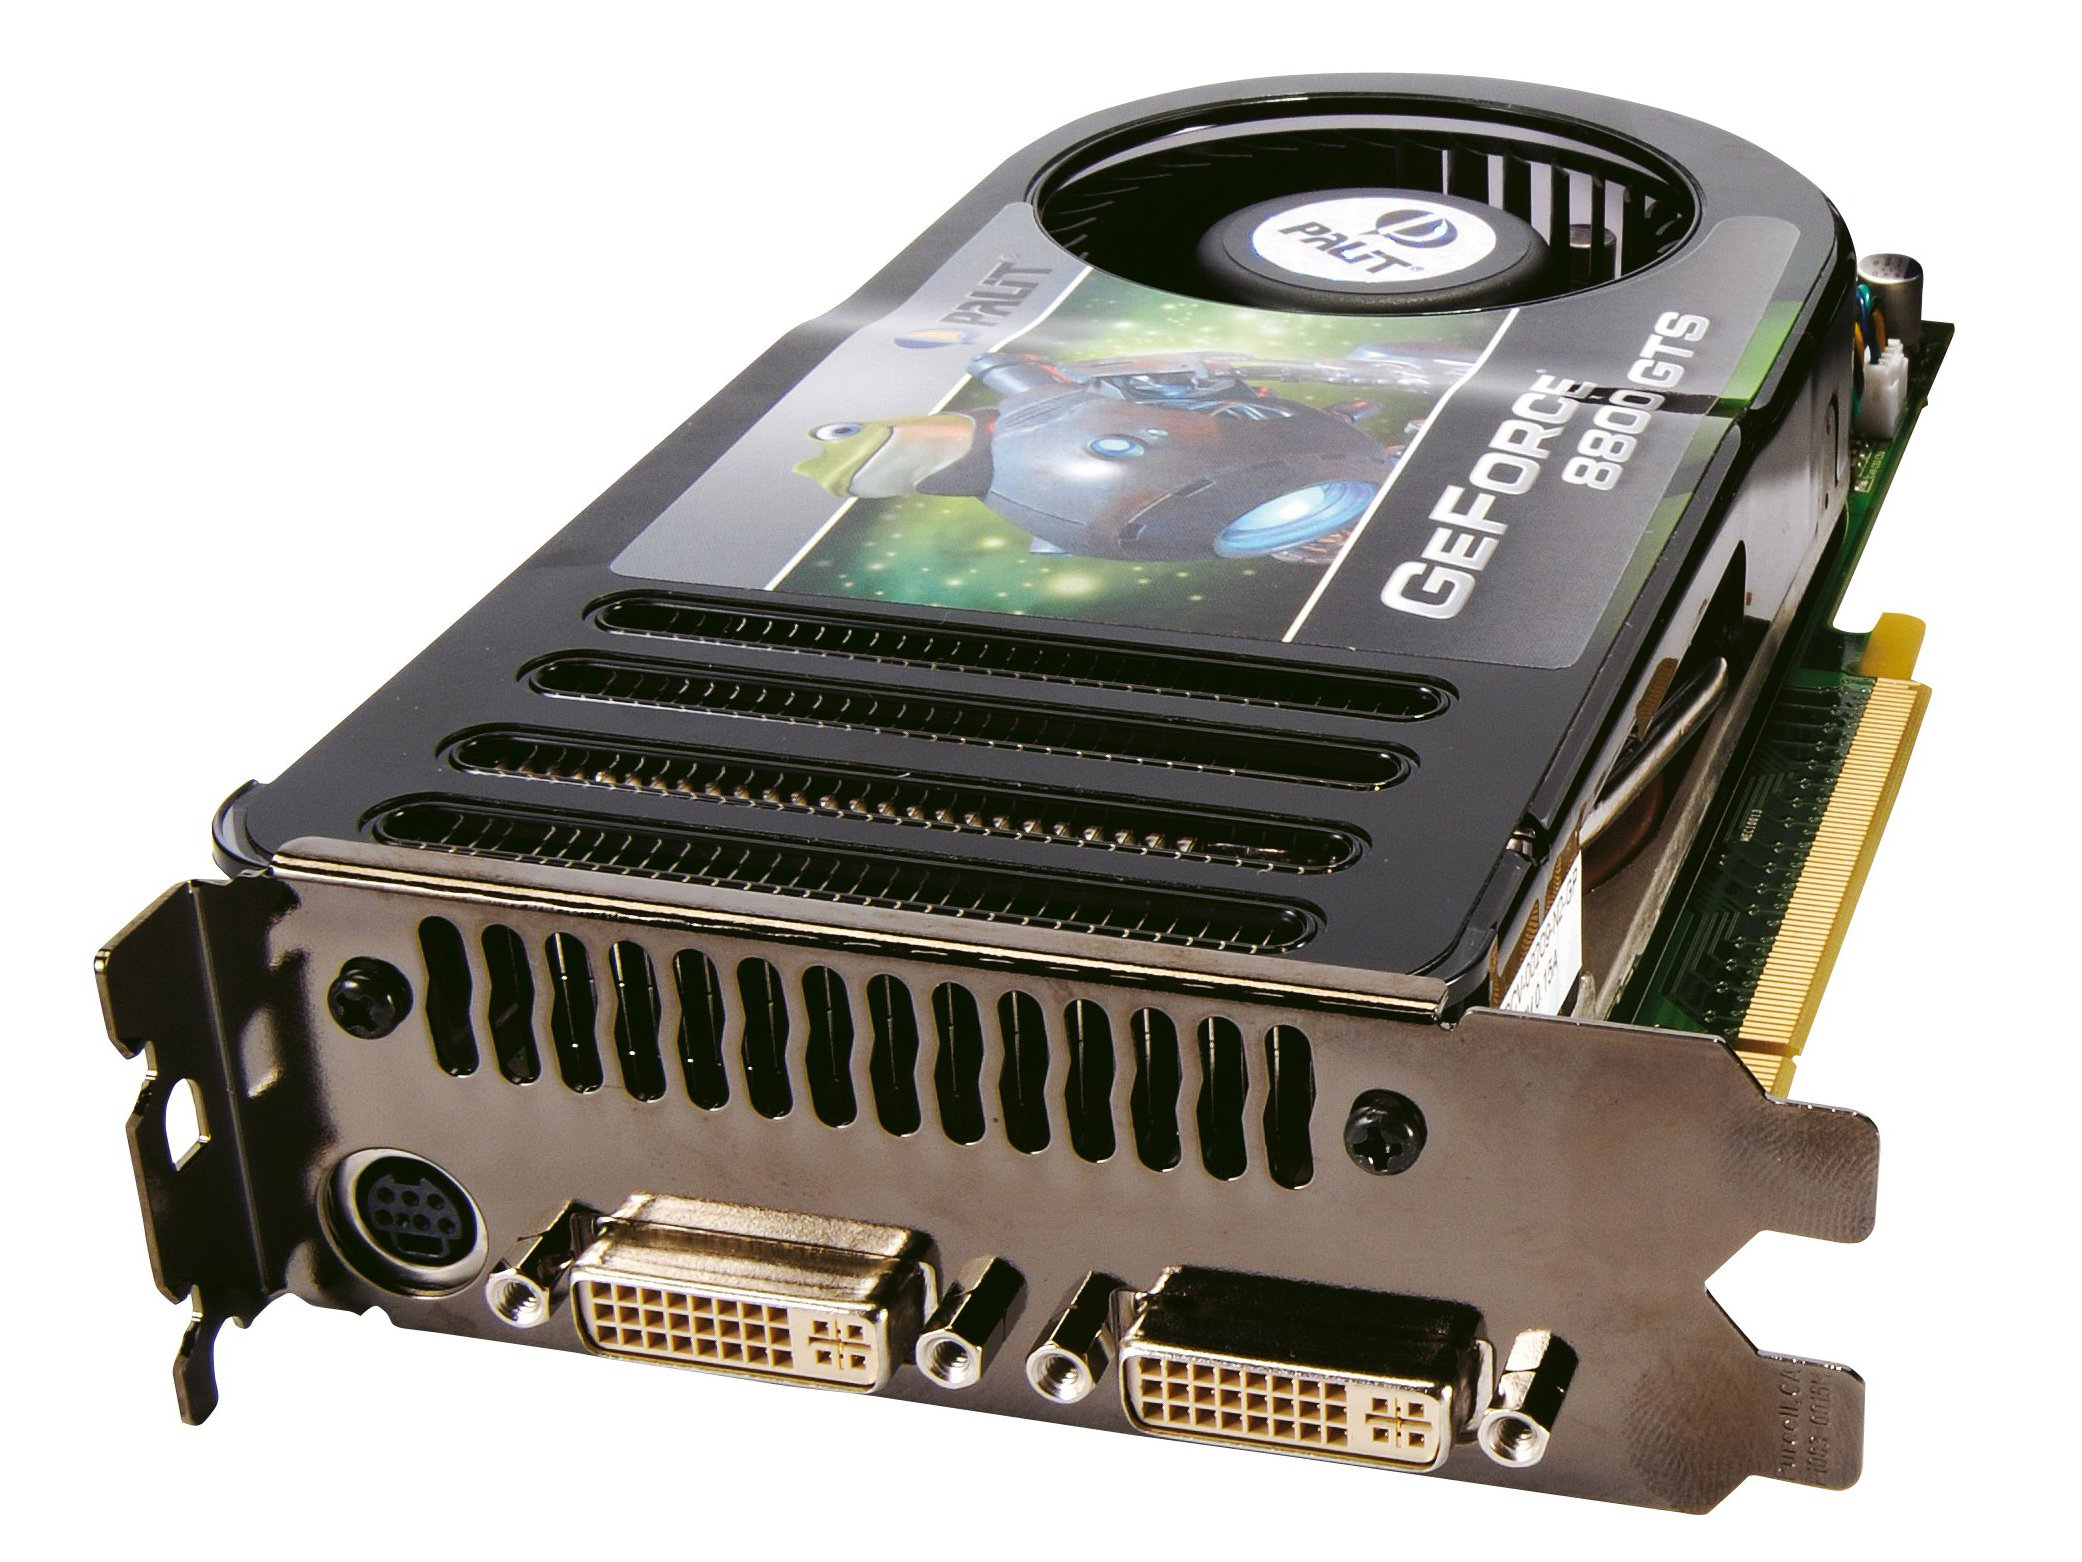 Geforce 8800 gts. GEFORCE GTX 8800 GTS. NVIDIA GEFORCE 8800 GTS. Видеокарта GEFORCE 8800 gt. Нвидиа GEFORCE GTS 8800 512.